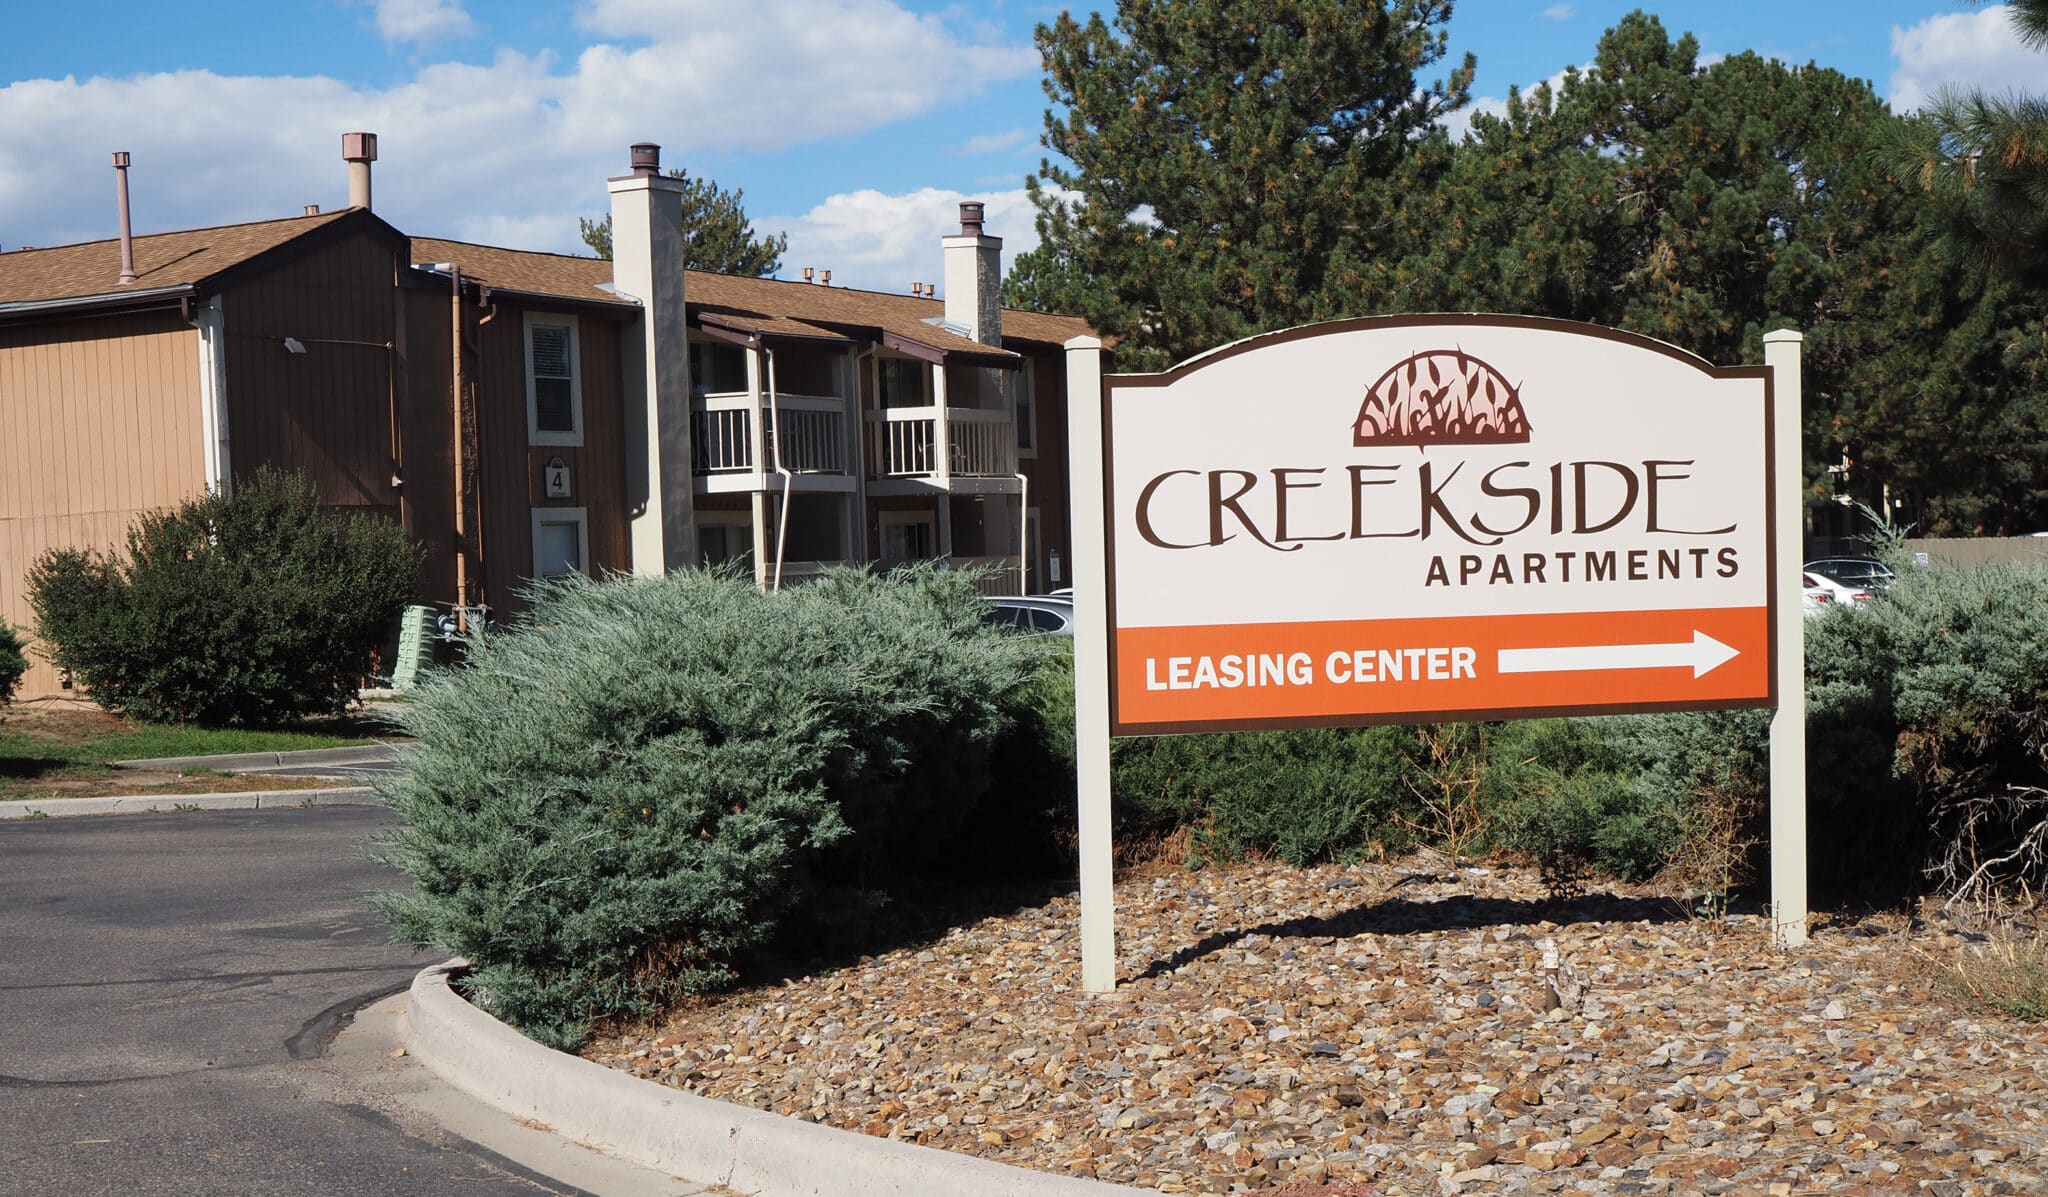 Cherry Creek apartment complex redevelopment planned